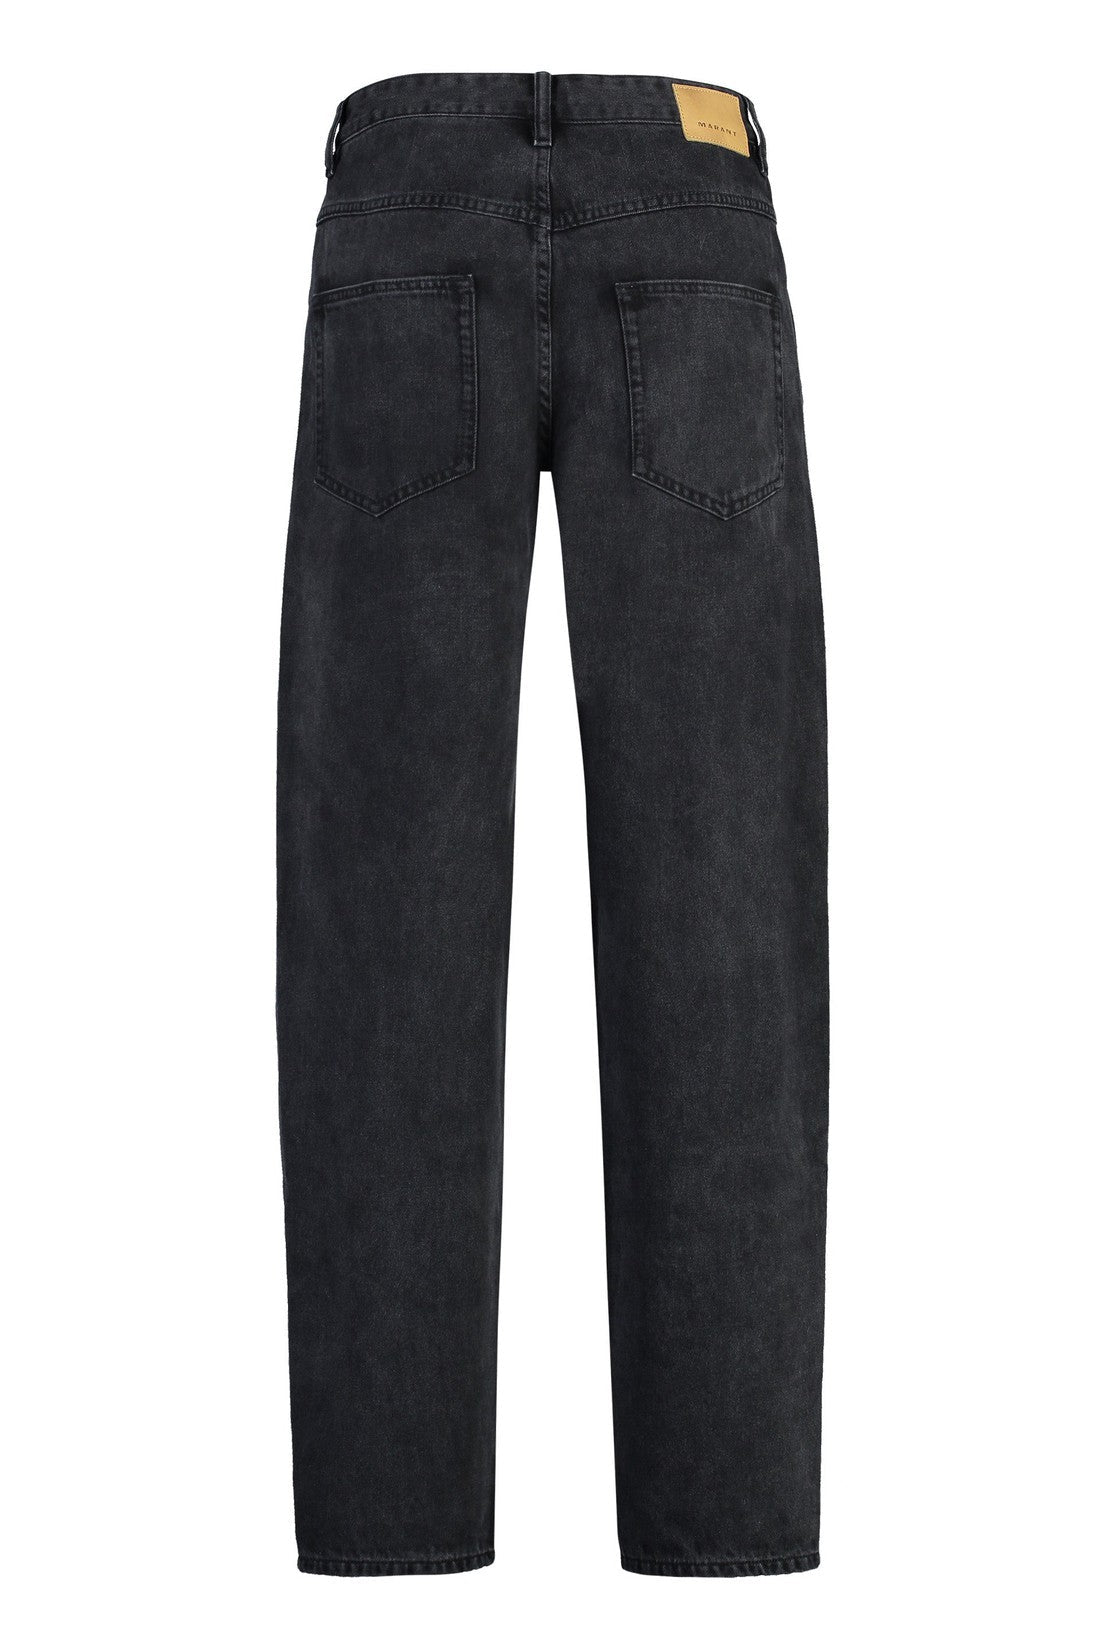 Isabel Marant-OUTLET-SALE-Larson 5-pocket jeans-ARCHIVIST